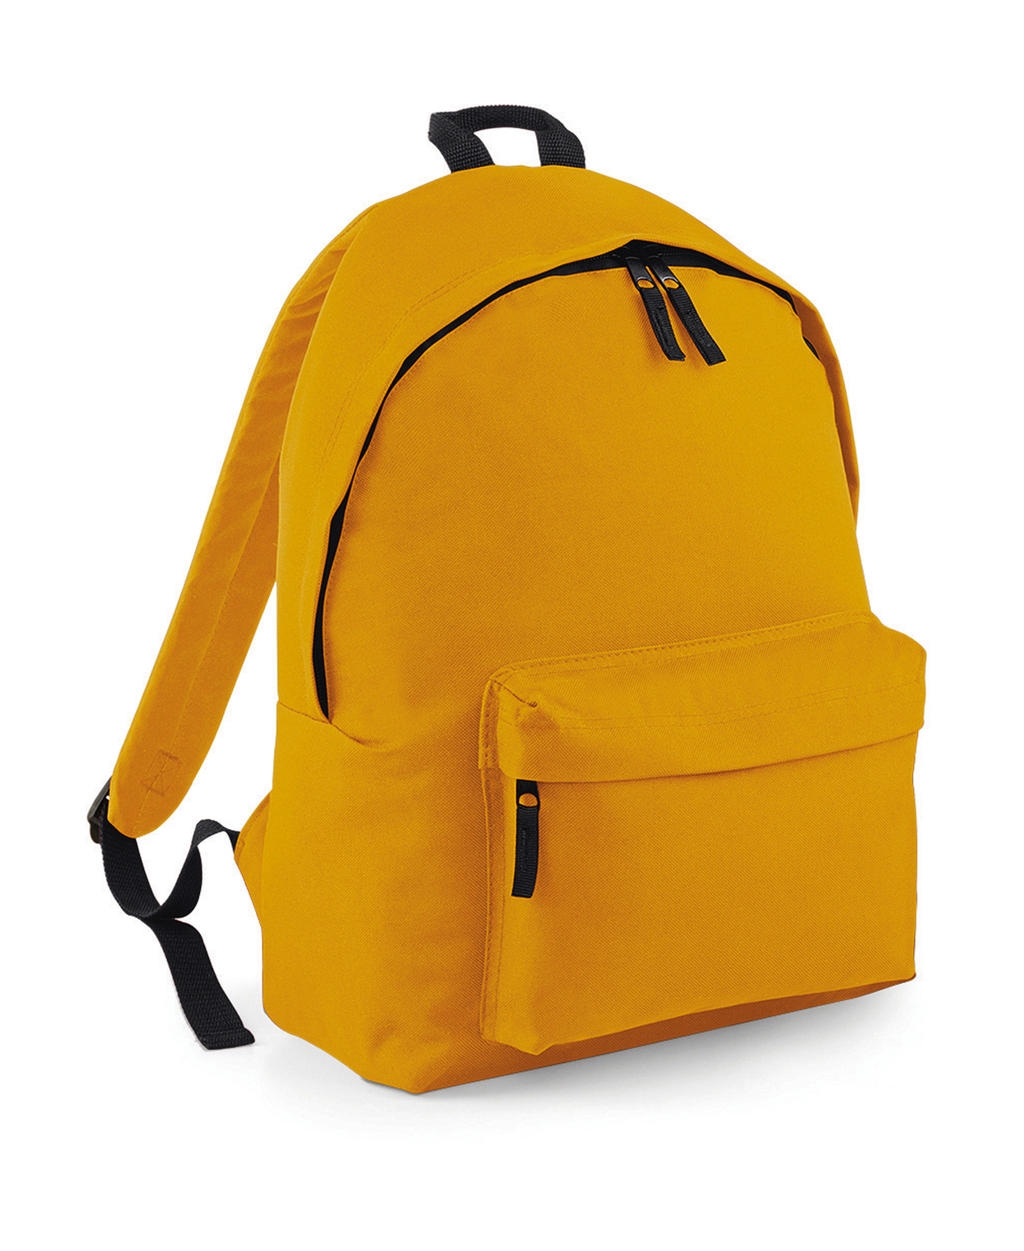 Fashion Backpack Mustard Jaune